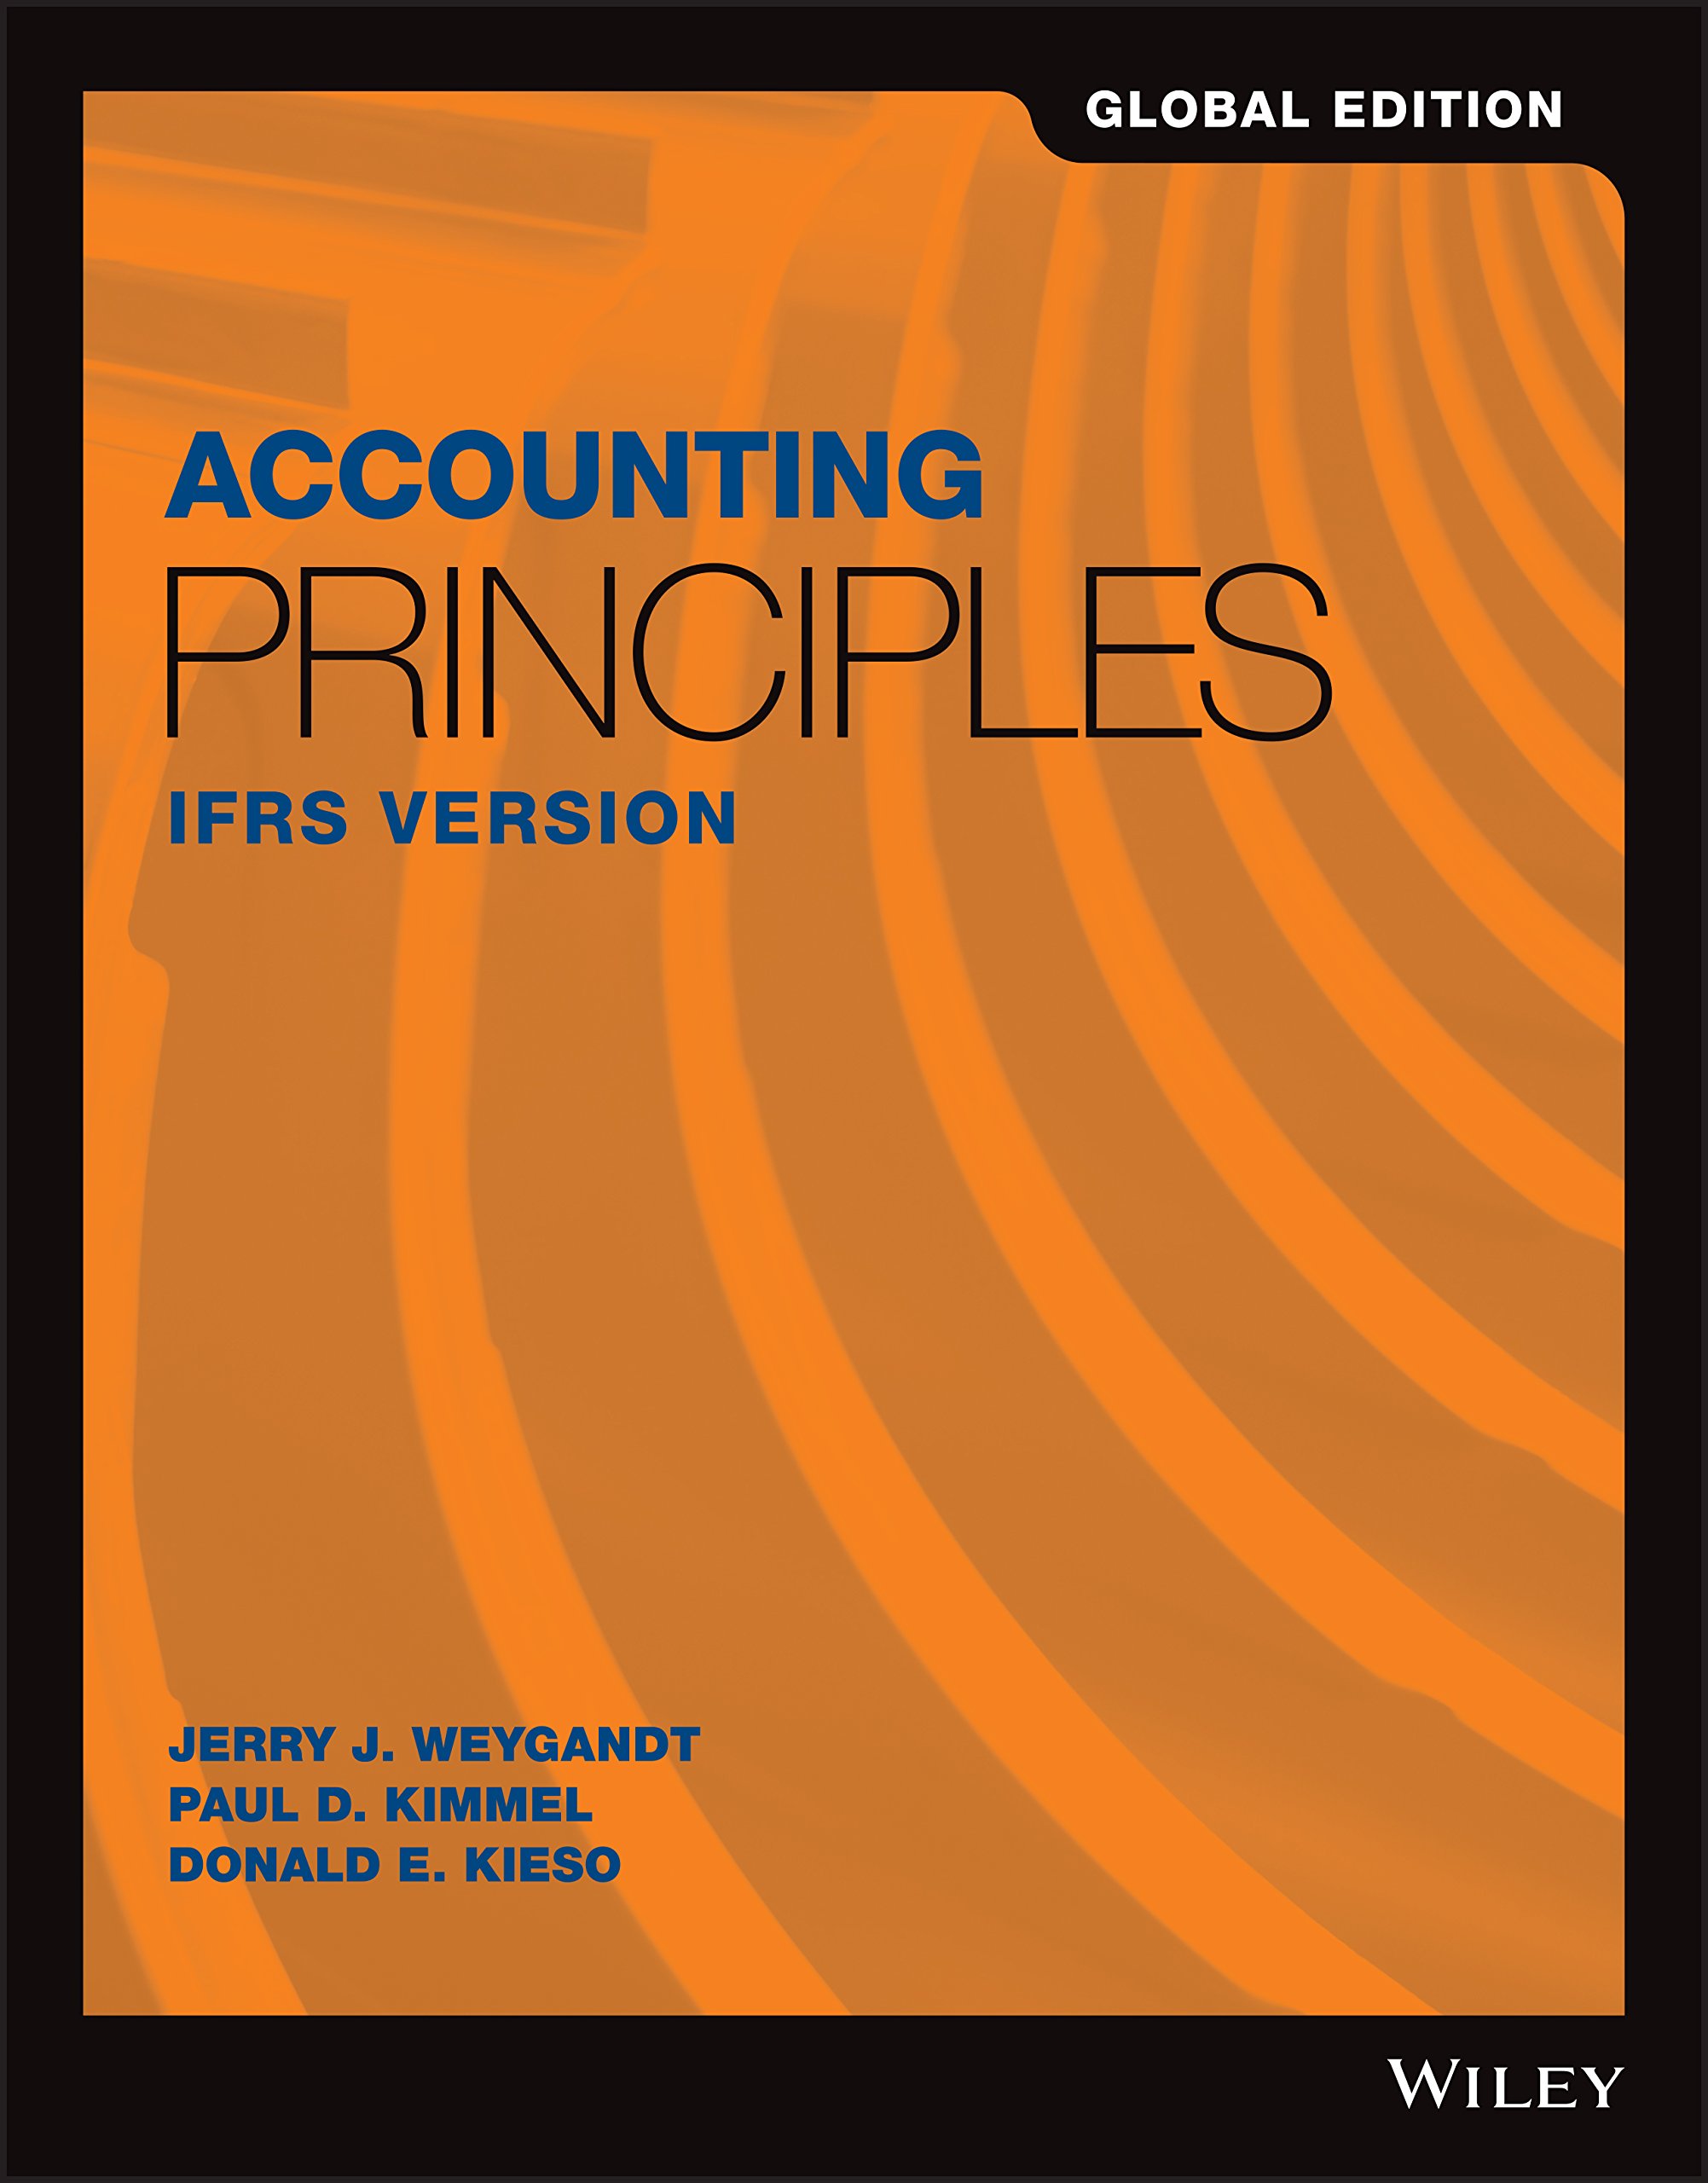 Accounting Principles 13 (Thirteenth ) Edition by Kieso & Kimmel